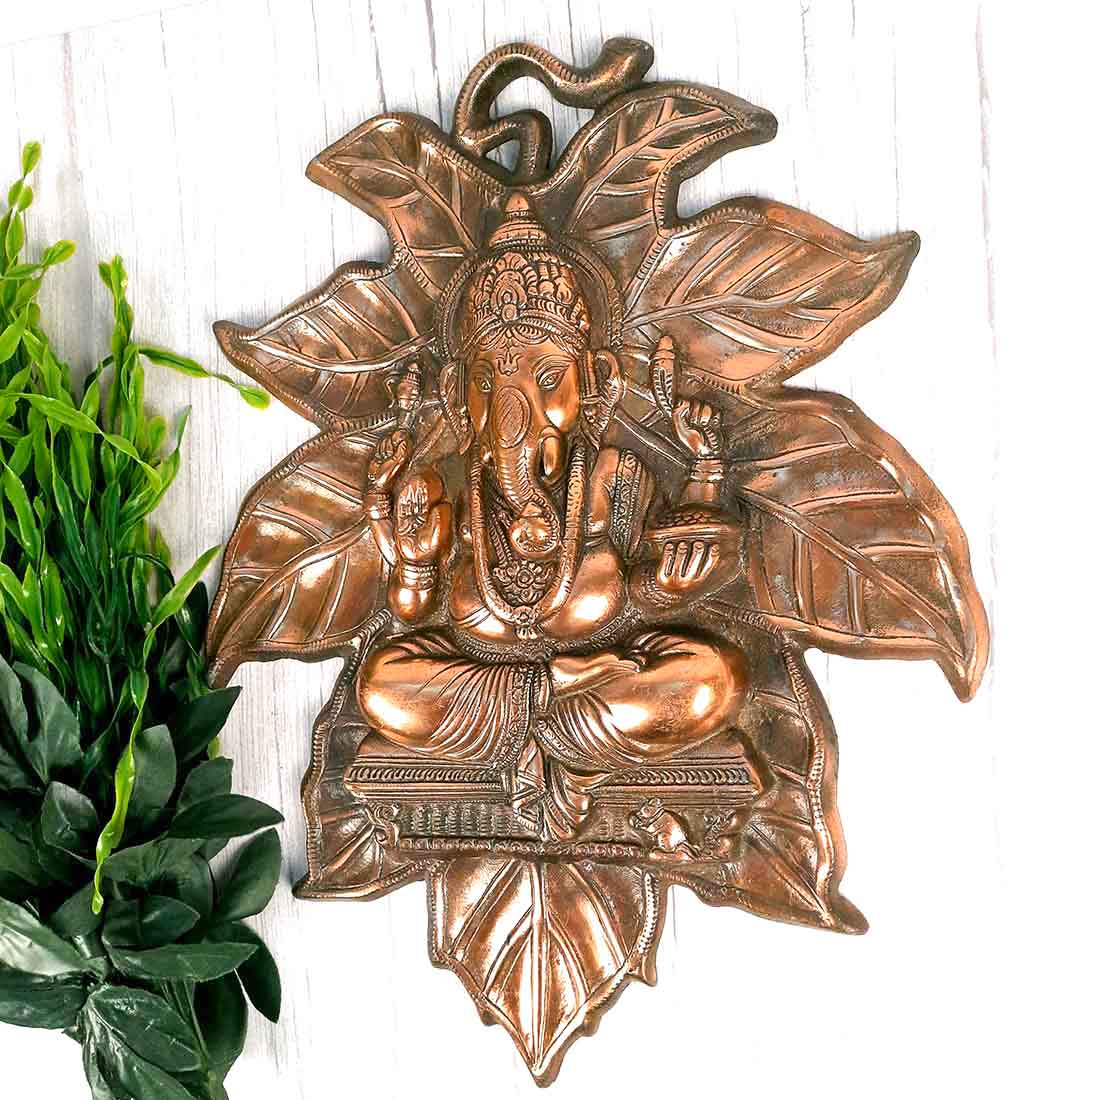 Ganesh Wall Hanging Idol Big | Lord Ganesha Statue Wall With Leaf Design Art - For Puja, Home & Main Gate |Religoius & Spiritual Decor for Living Room - 18  Inch